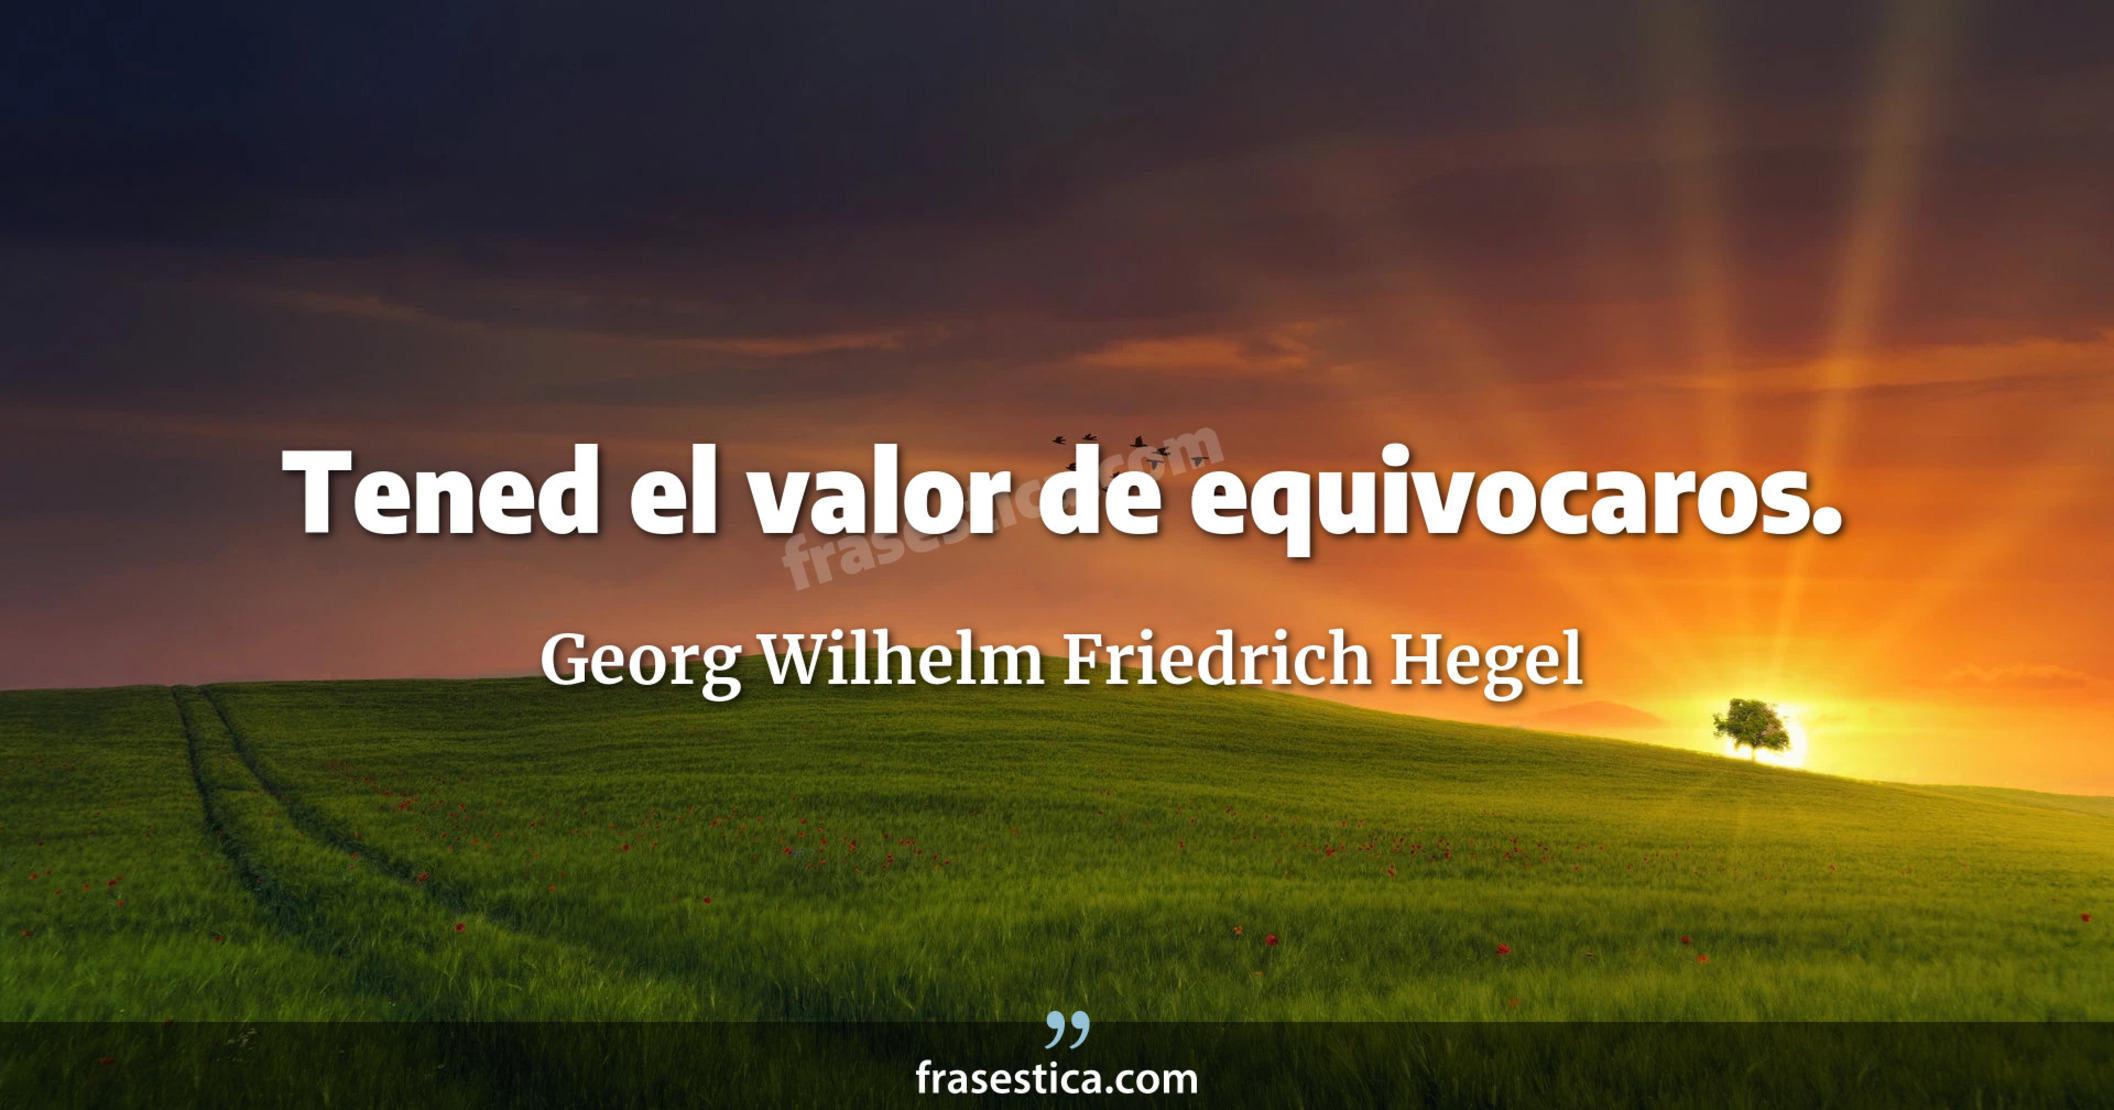 Tened el valor de equivocaros. - Georg Wilhelm Friedrich Hegel